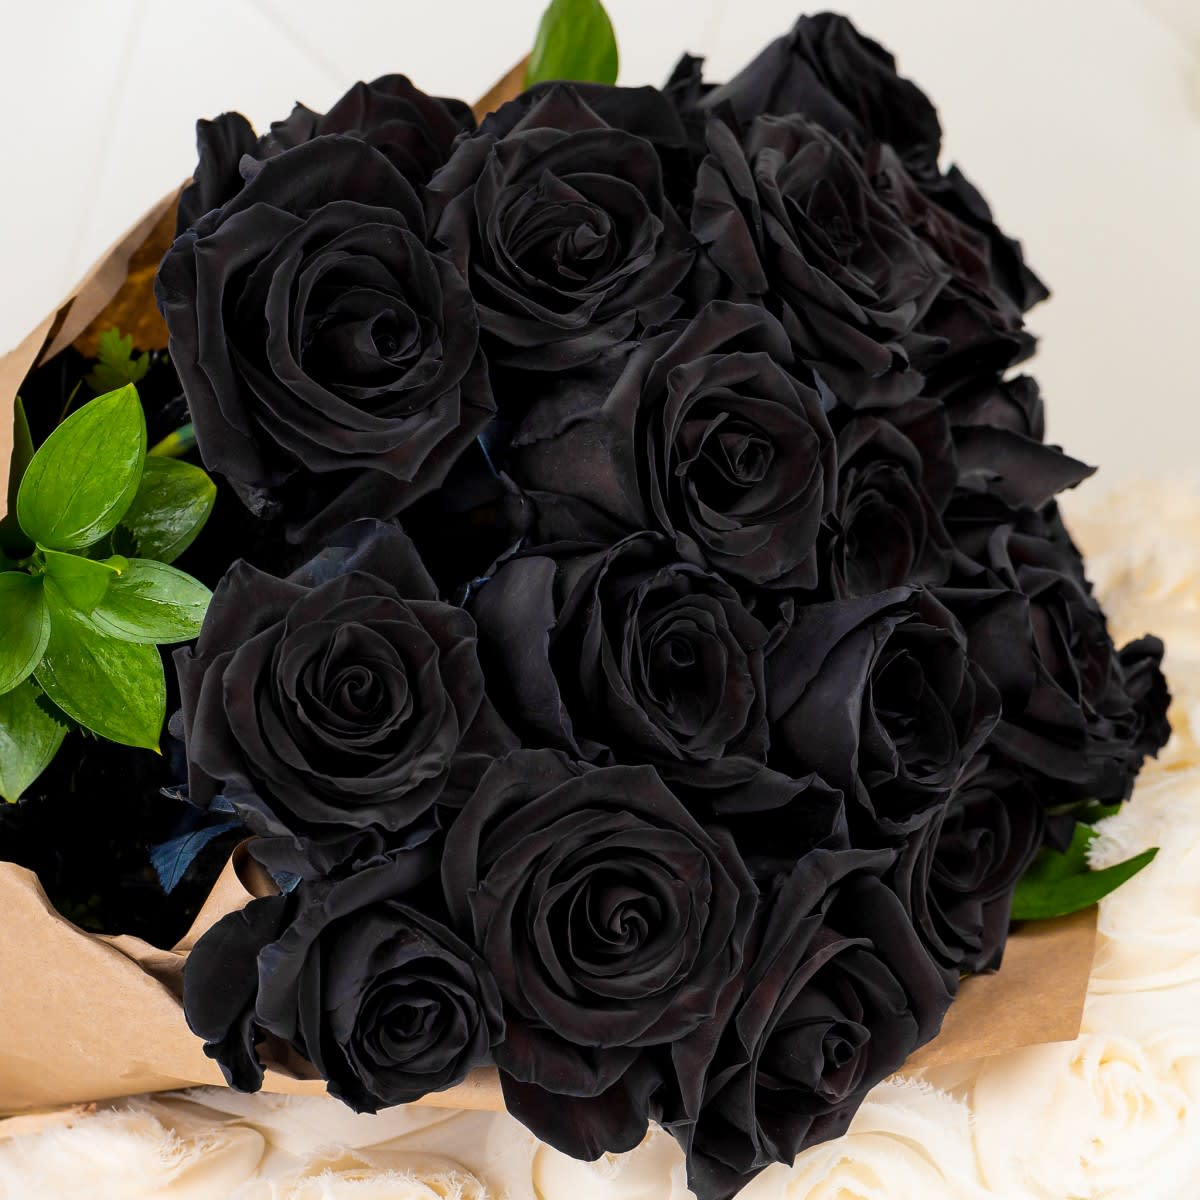 Black Roses Arranged In A Vase In Miami Beach Fl Miami Beach Flowers®